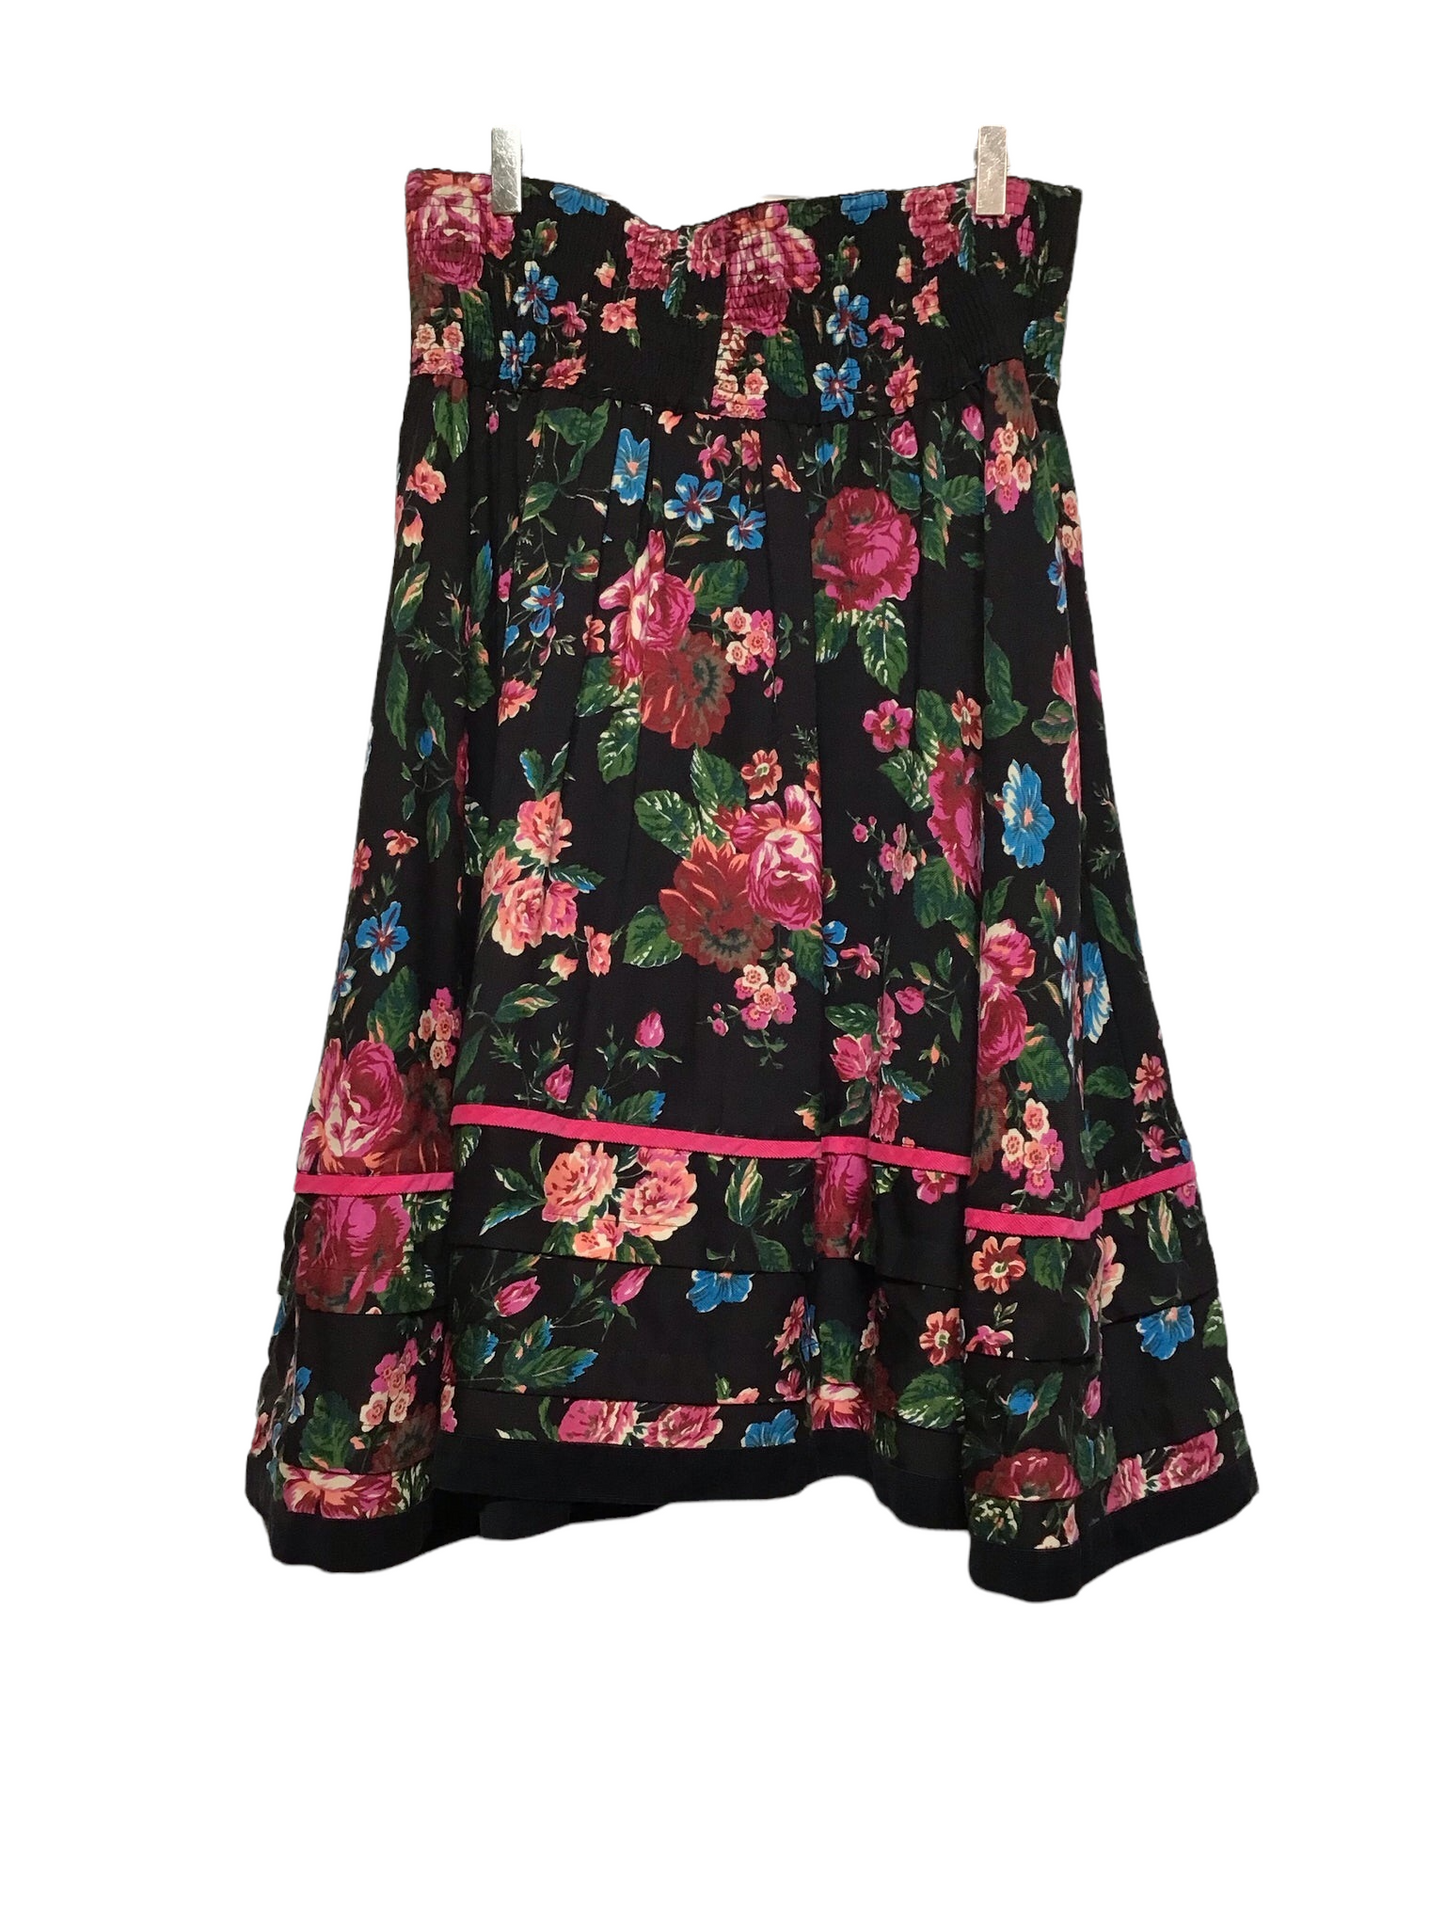 KENZO Floral Midi Skirt (Size L)